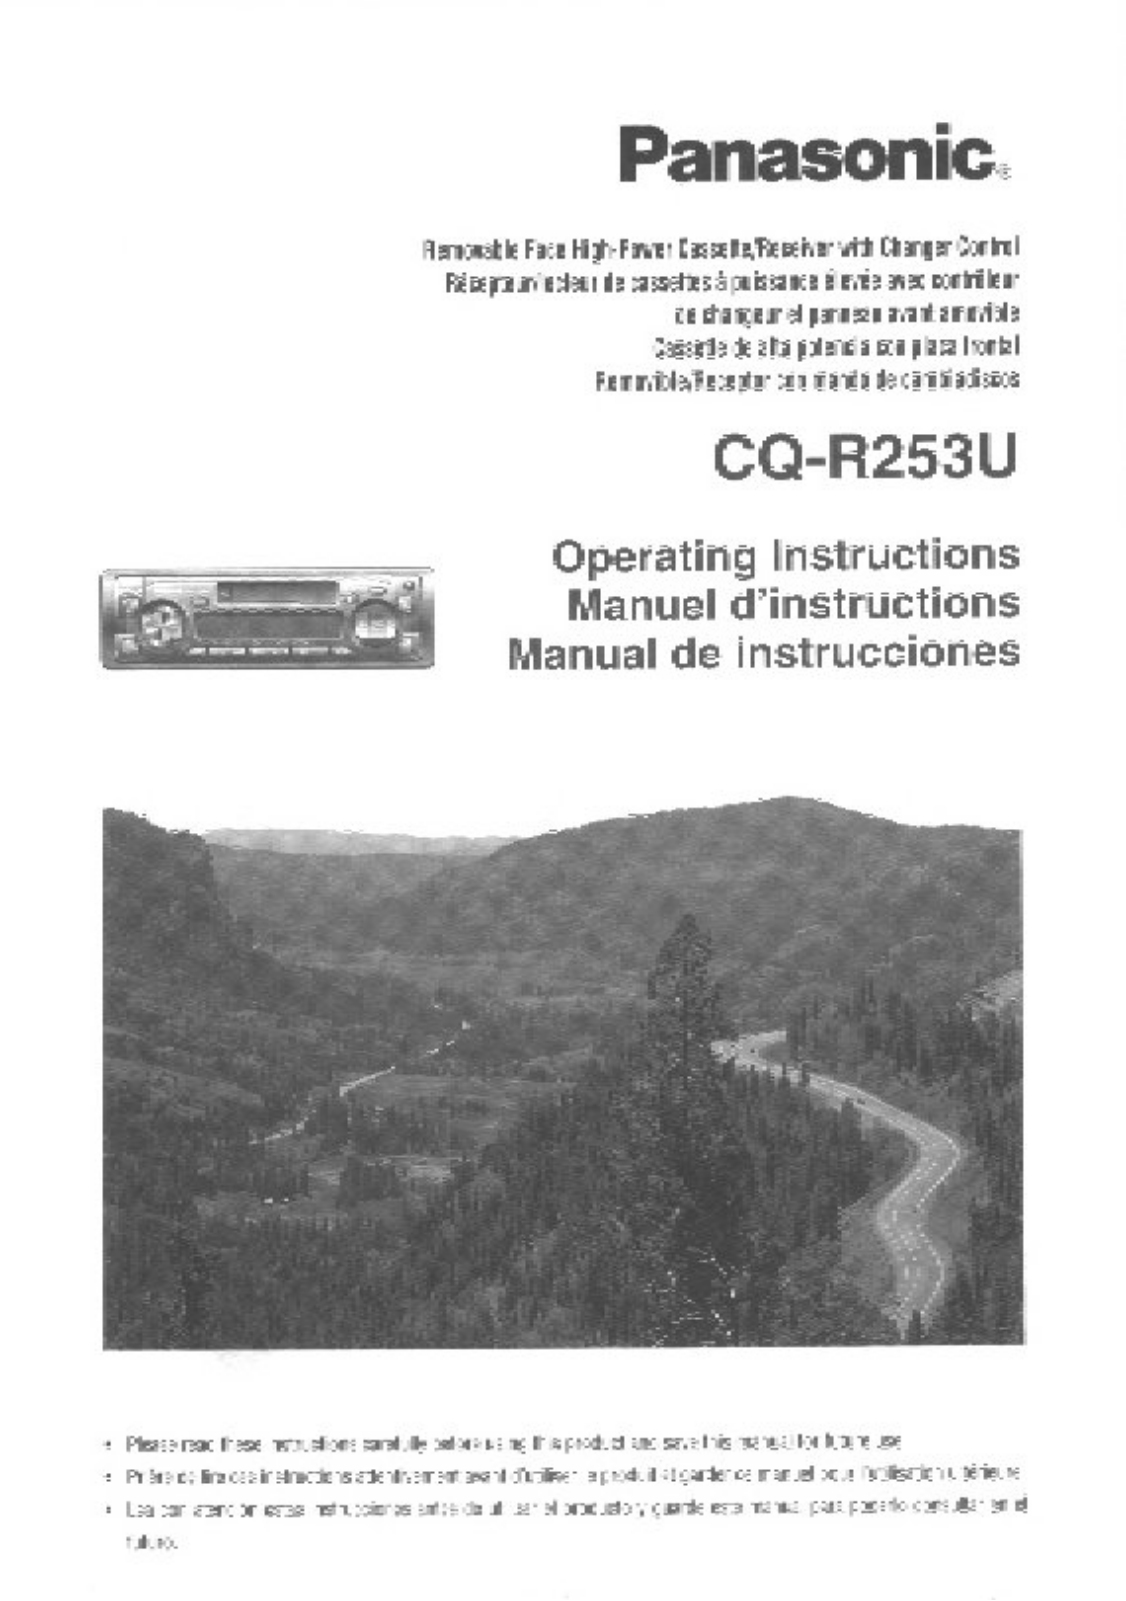 Panasonic cq-r253u Operation Manual